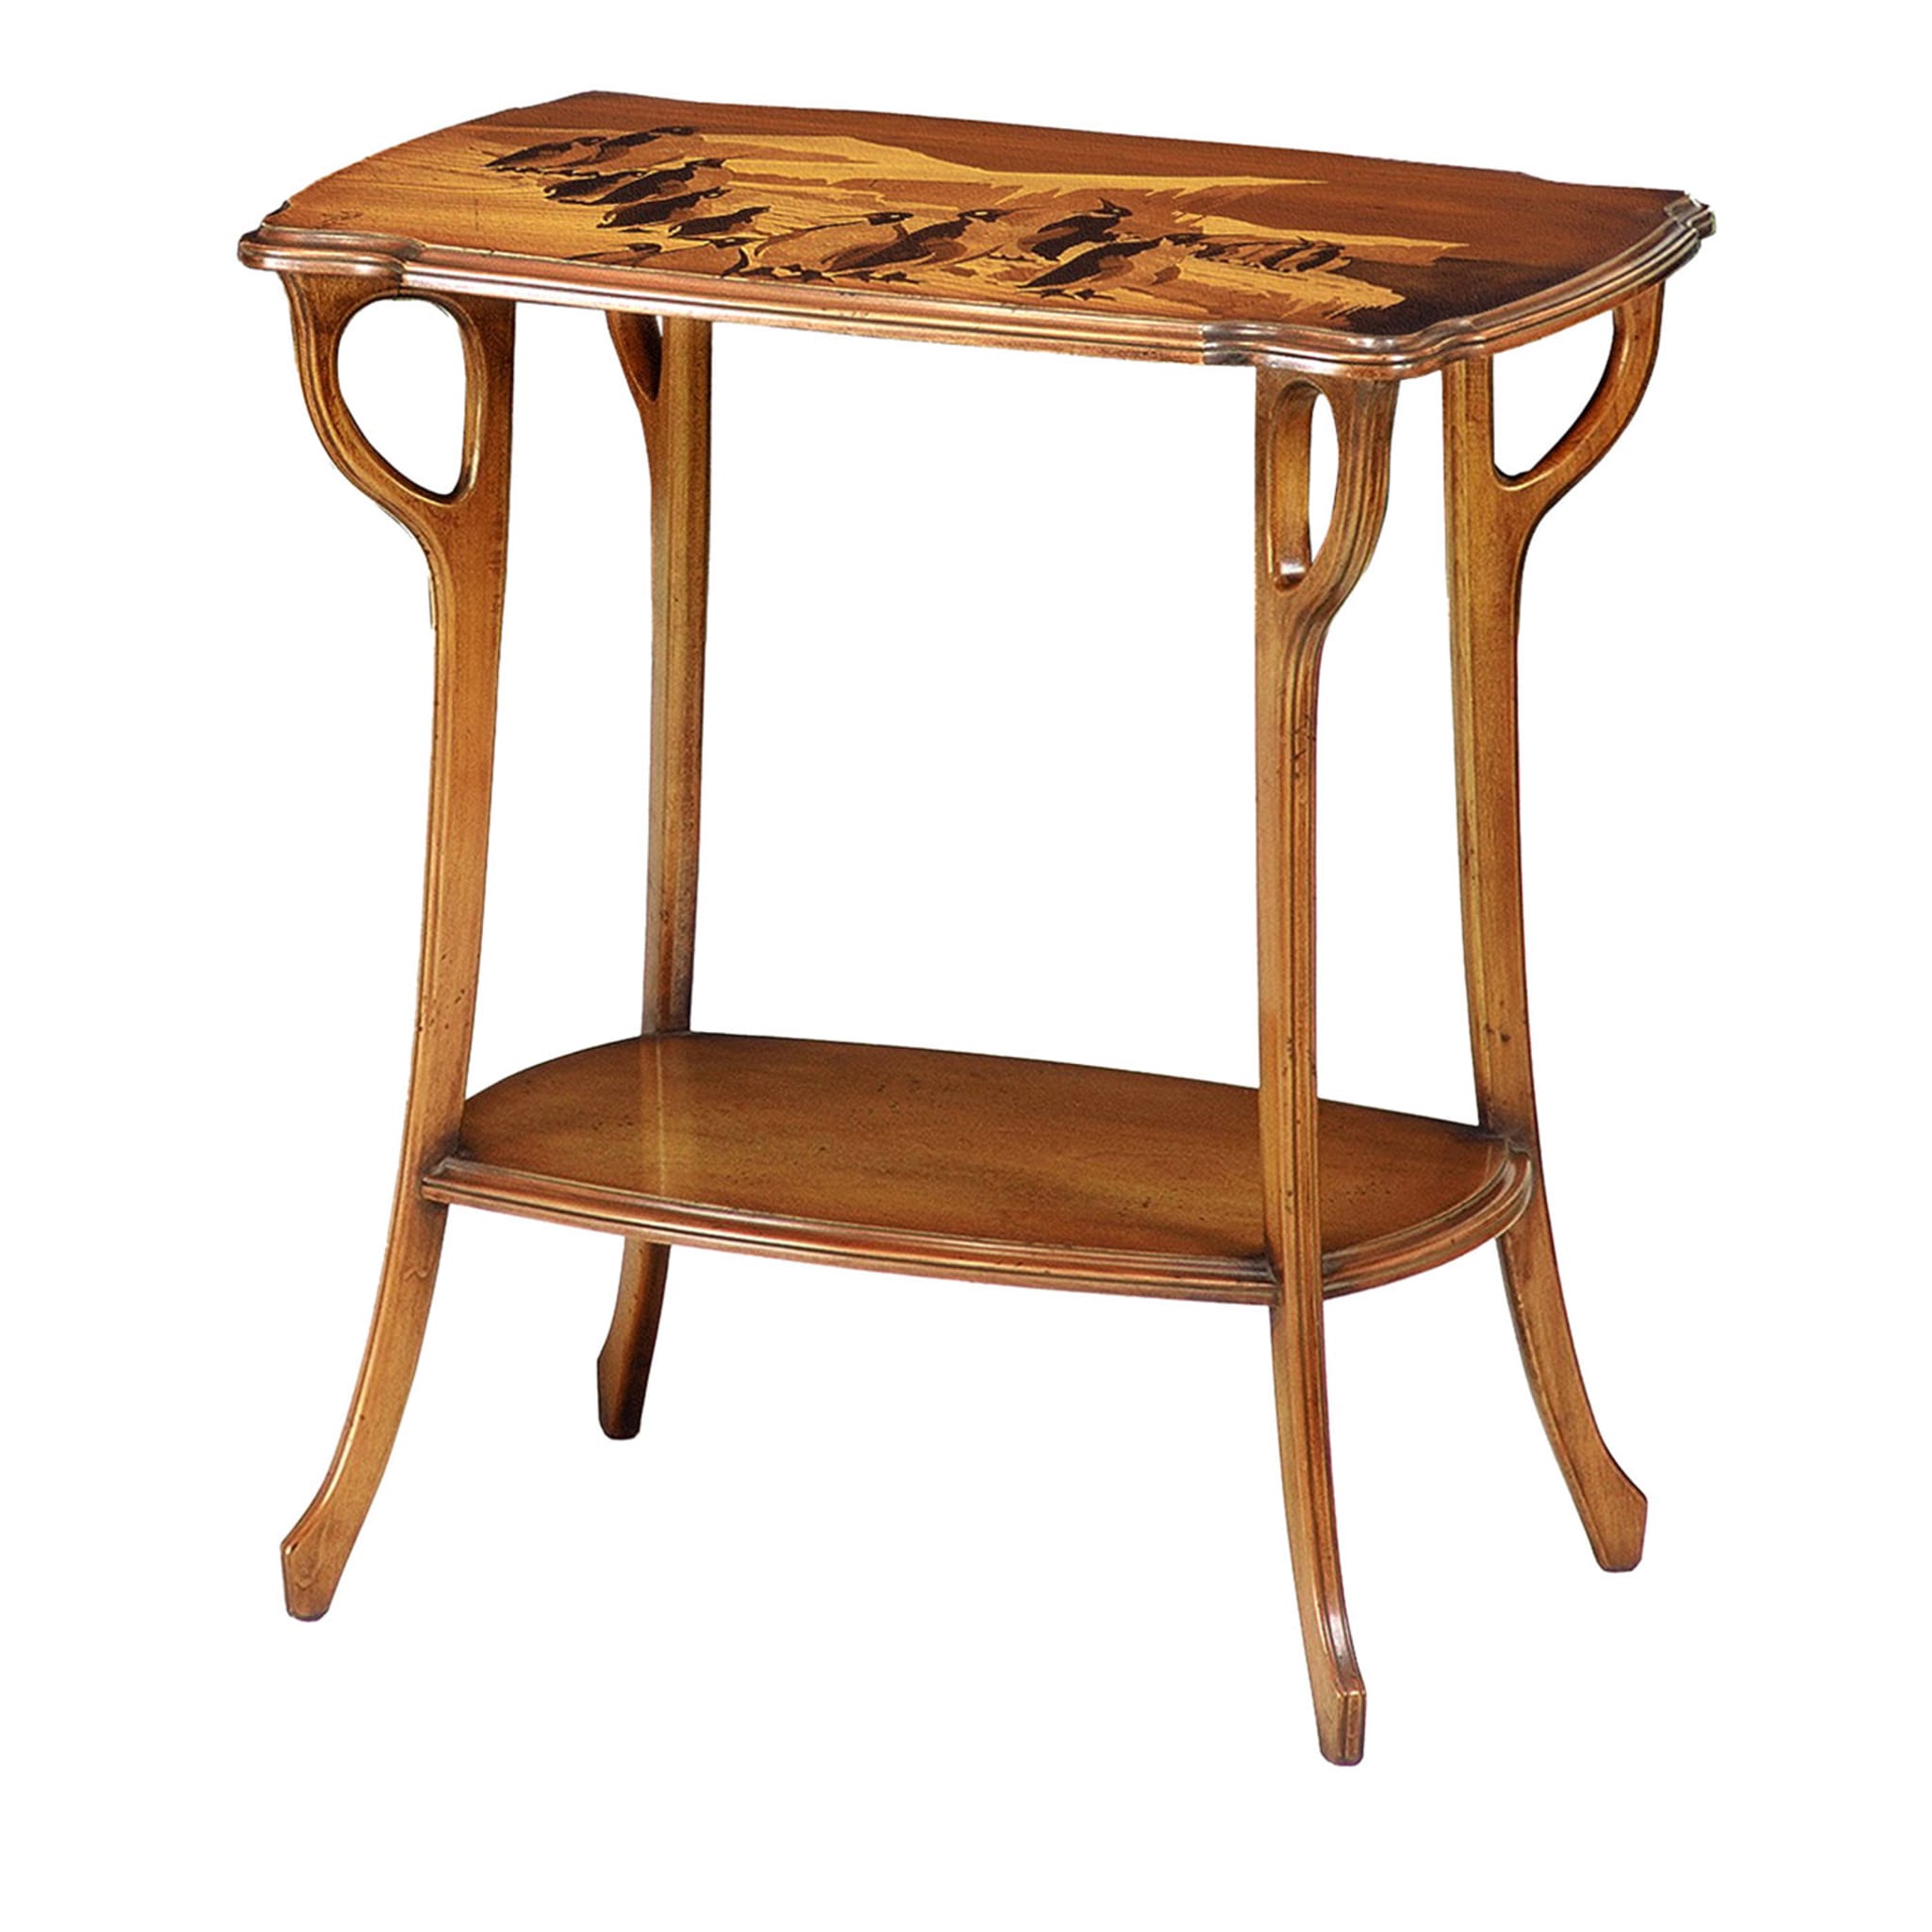 French Art Nouveau-Style Side Table by Emile Gallè #3 - Main view